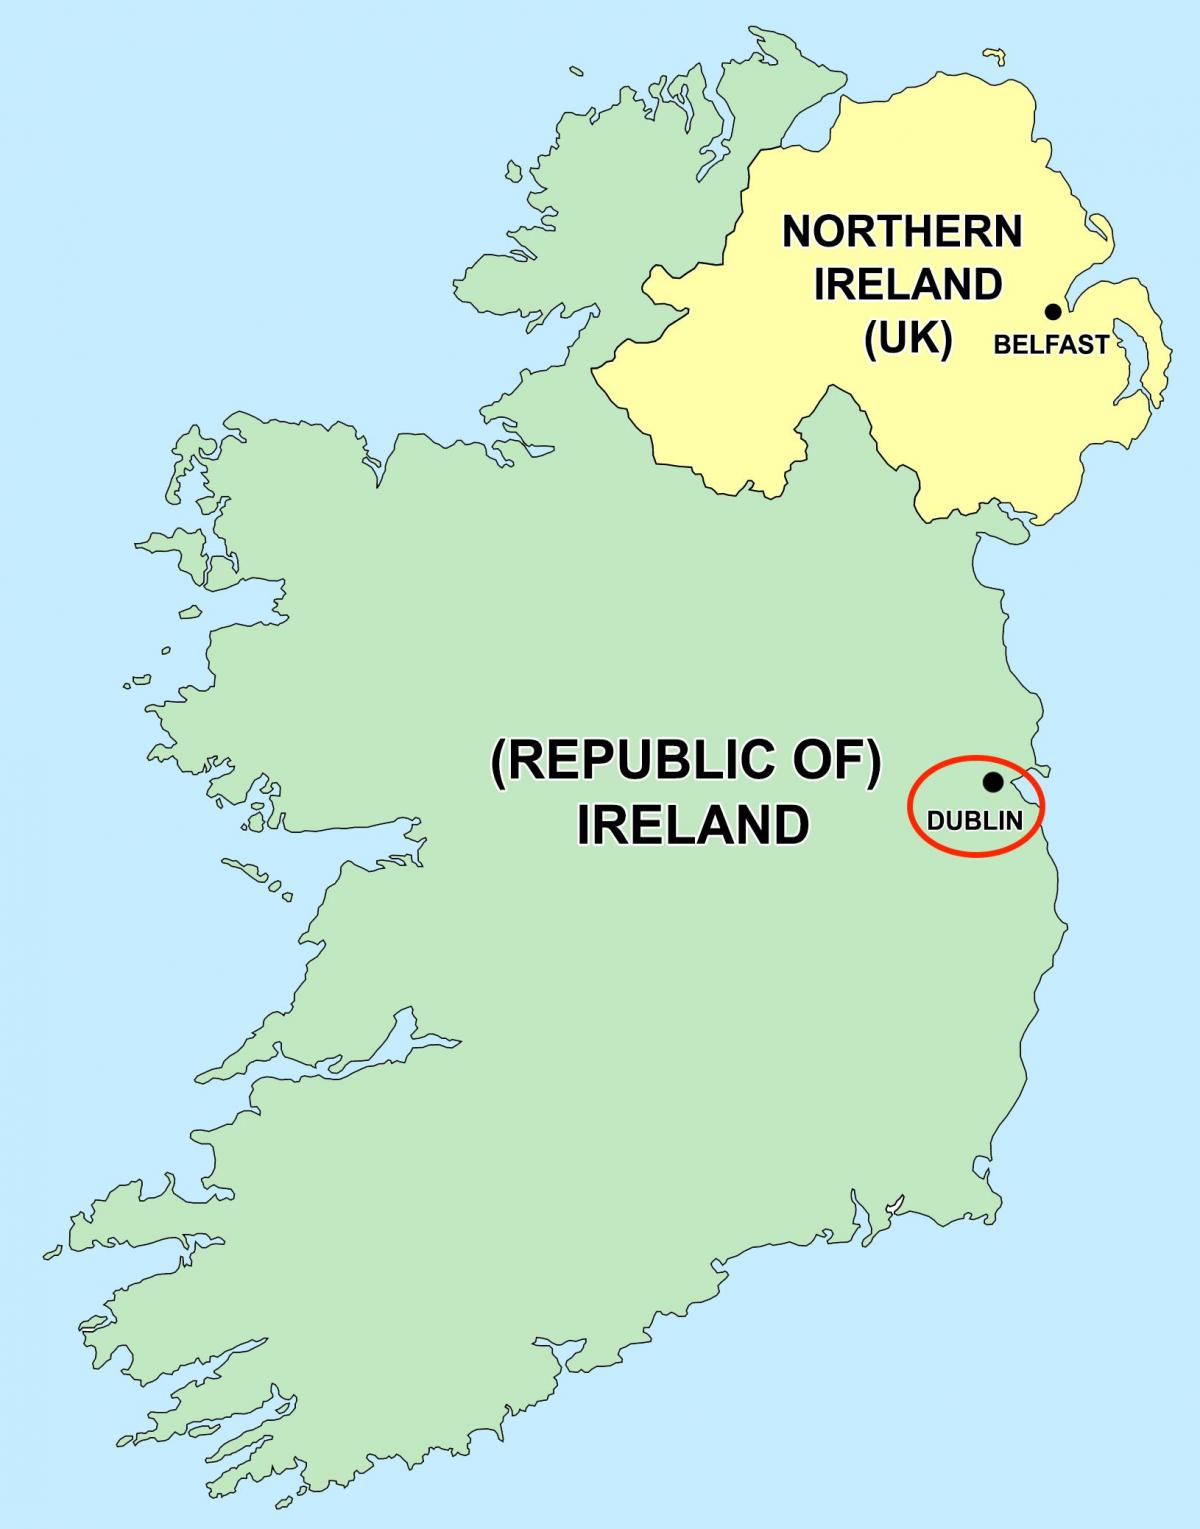 Ville de Dublin sur la carte de Leinster - Ireland